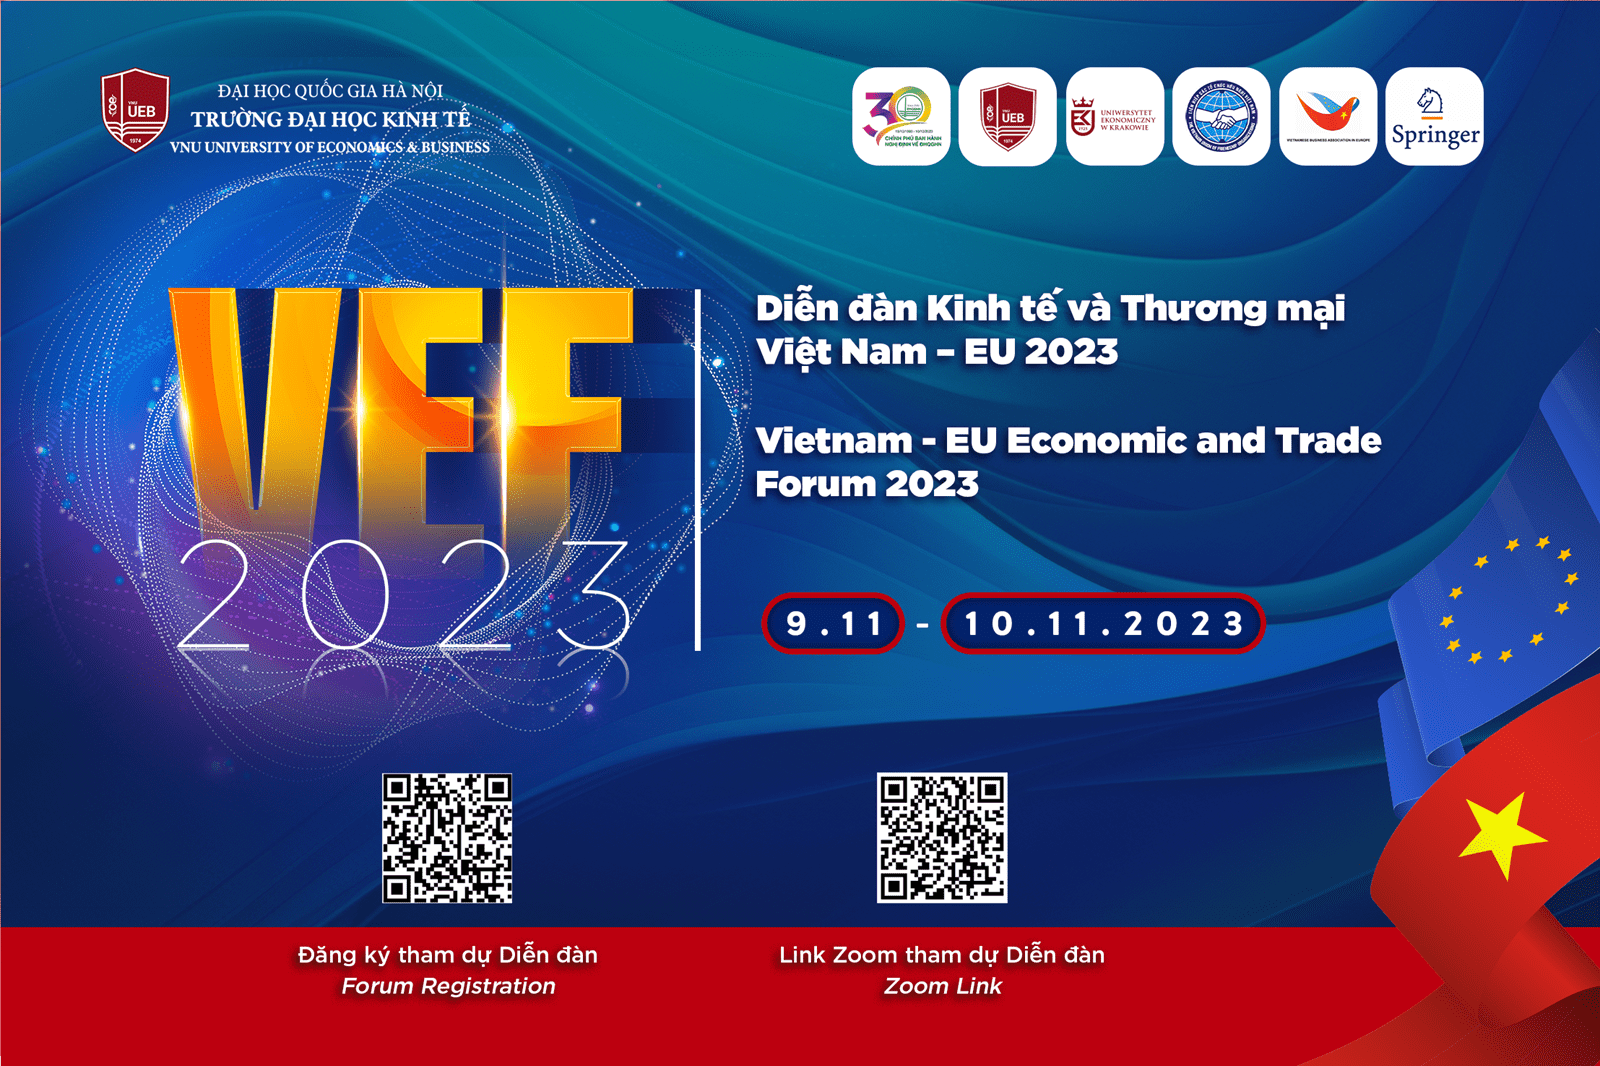 UEB will chair the Vietnam-EU Economic and Trade Forum 2023